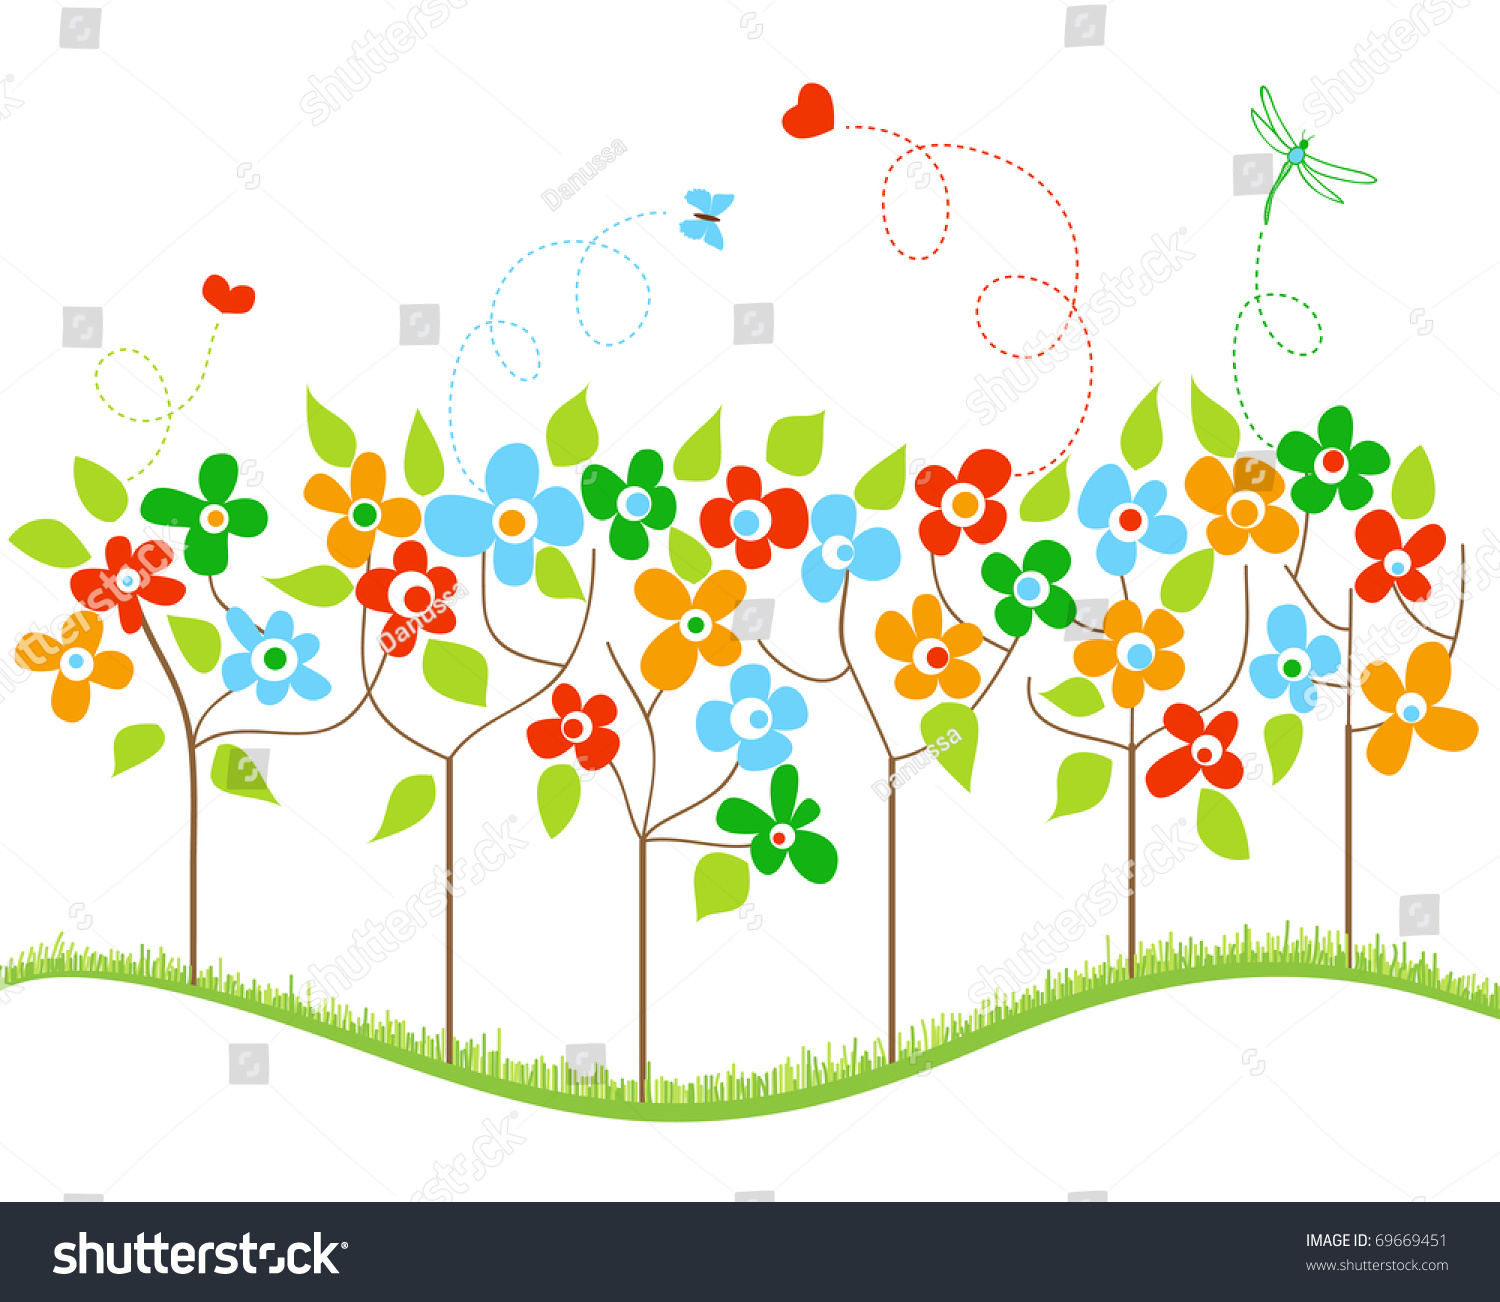 Spring Trees Stock Vector Illustration 69669451 : Shutterstock